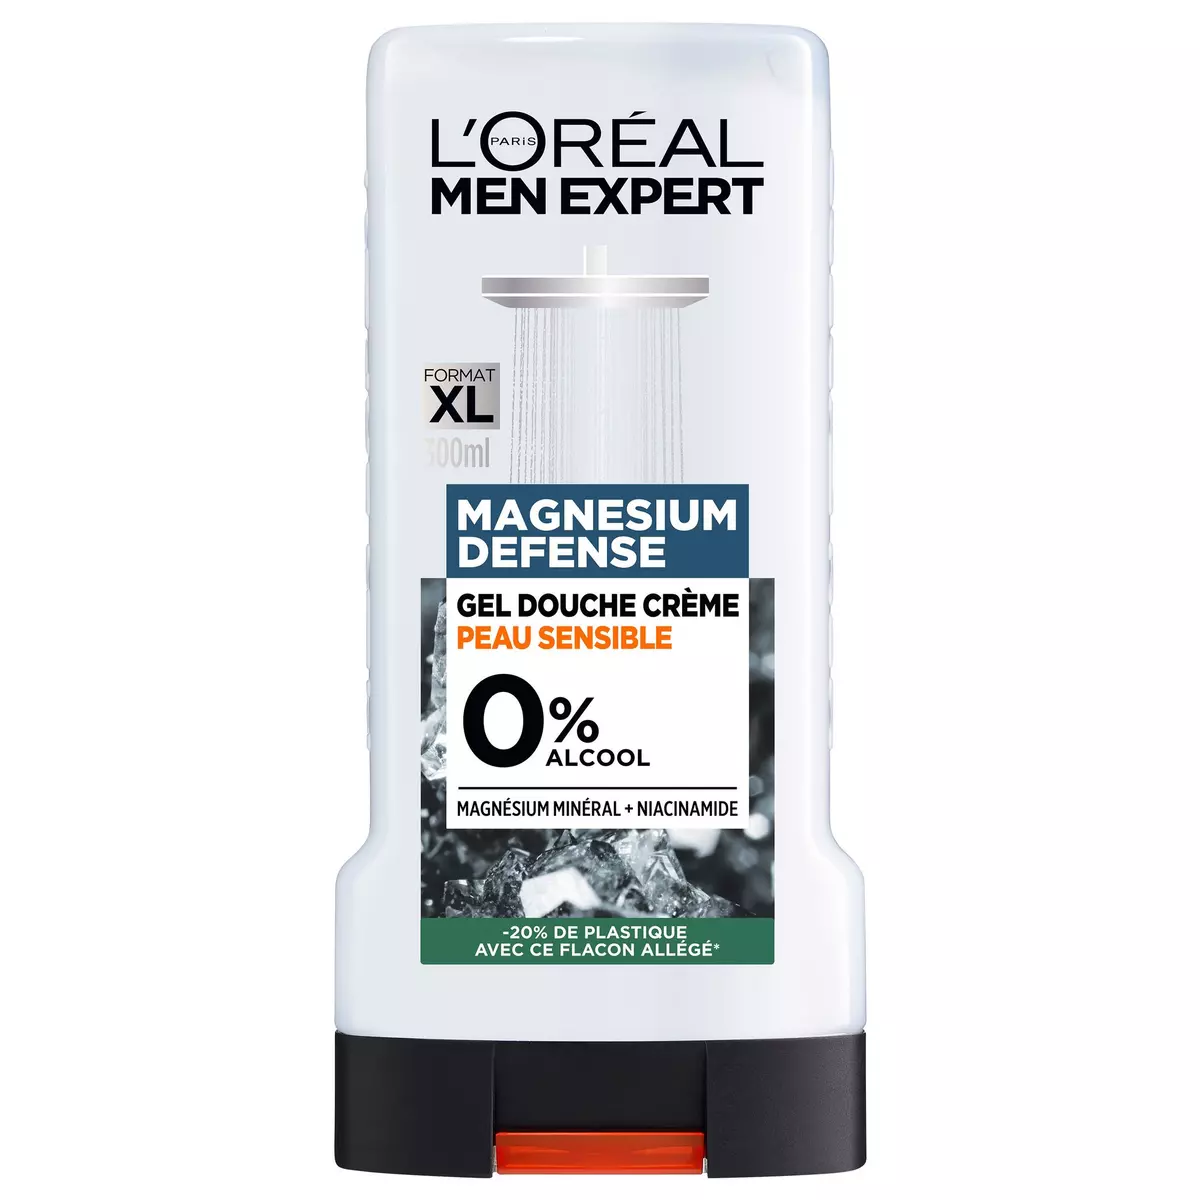 L'OREAL Men Expert gel douche crème peau sensible 300ml